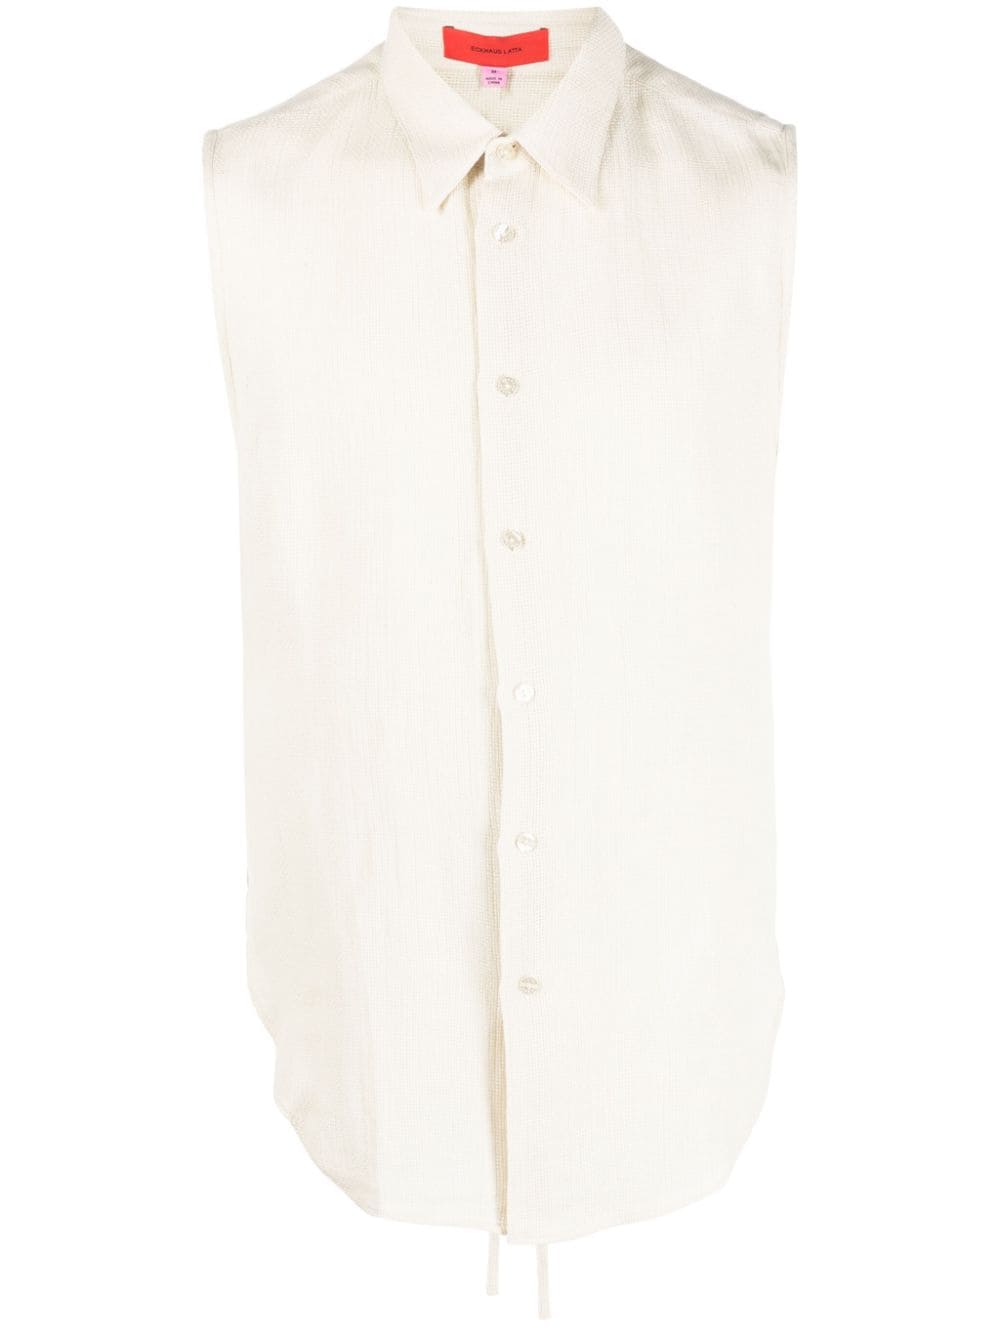 Image 1 of Eckhaus Latta open-back sleeveless shirt